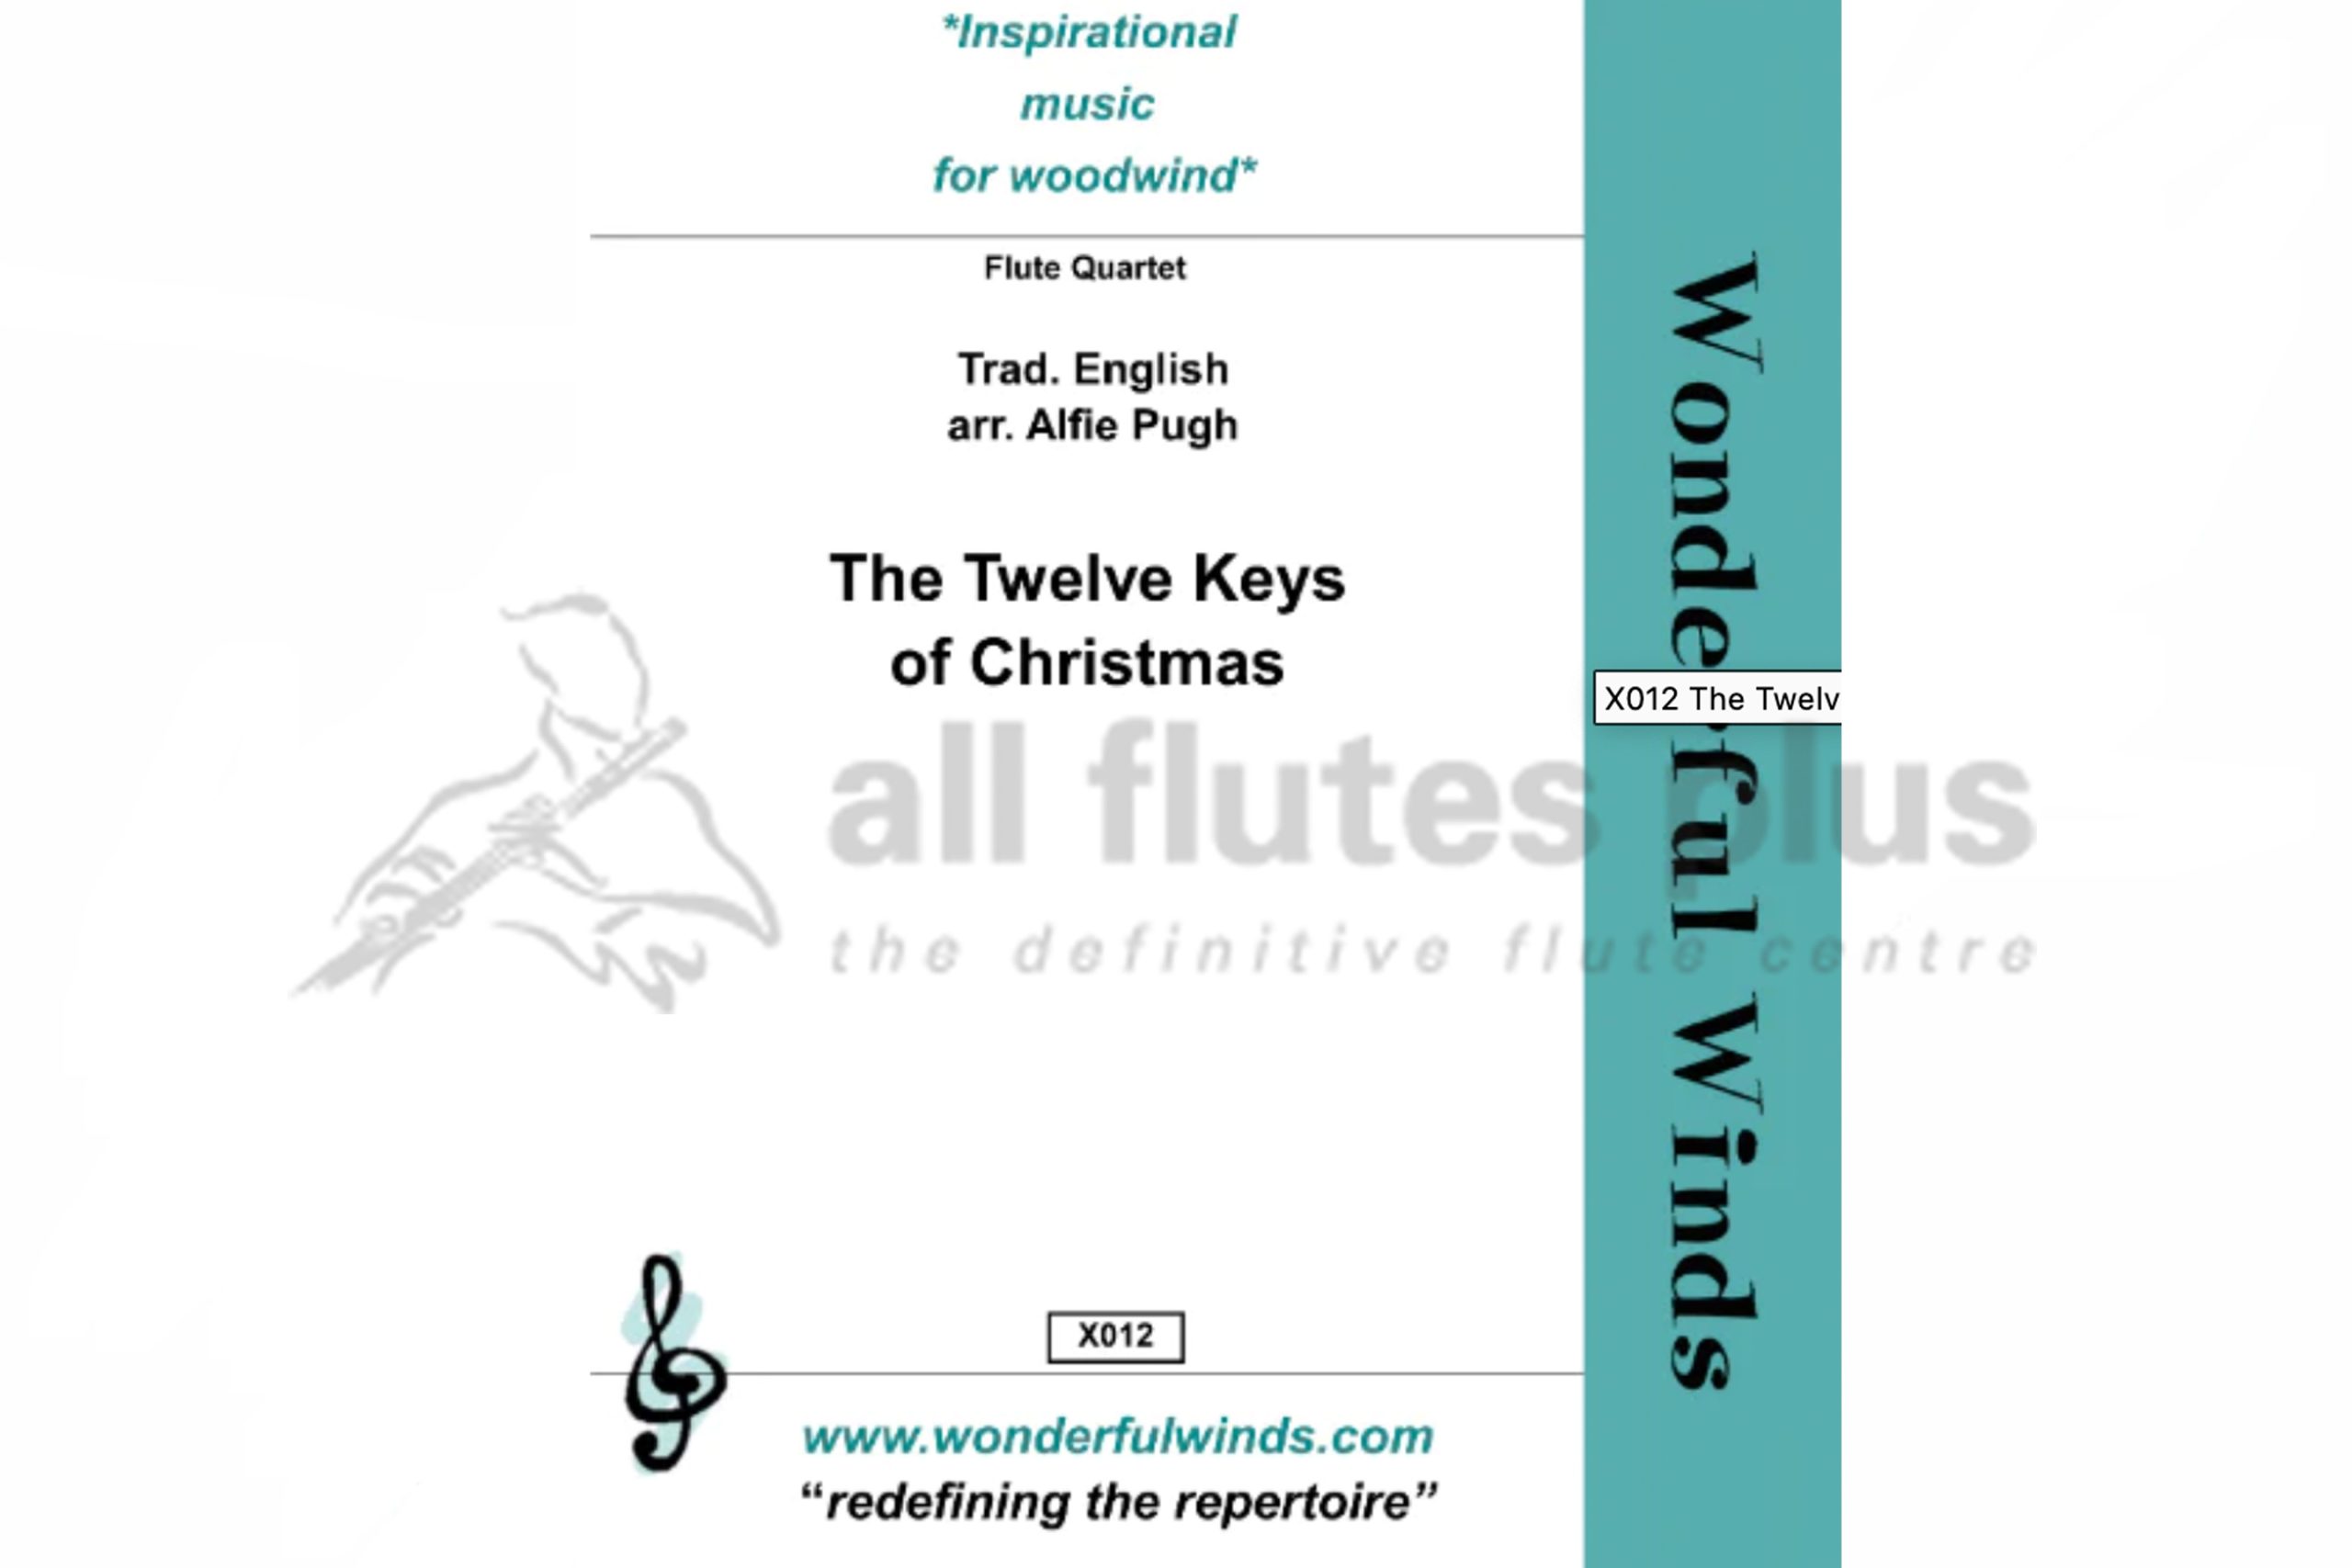 The Twelve Keys of Christmas for Mixed Flute Quartet